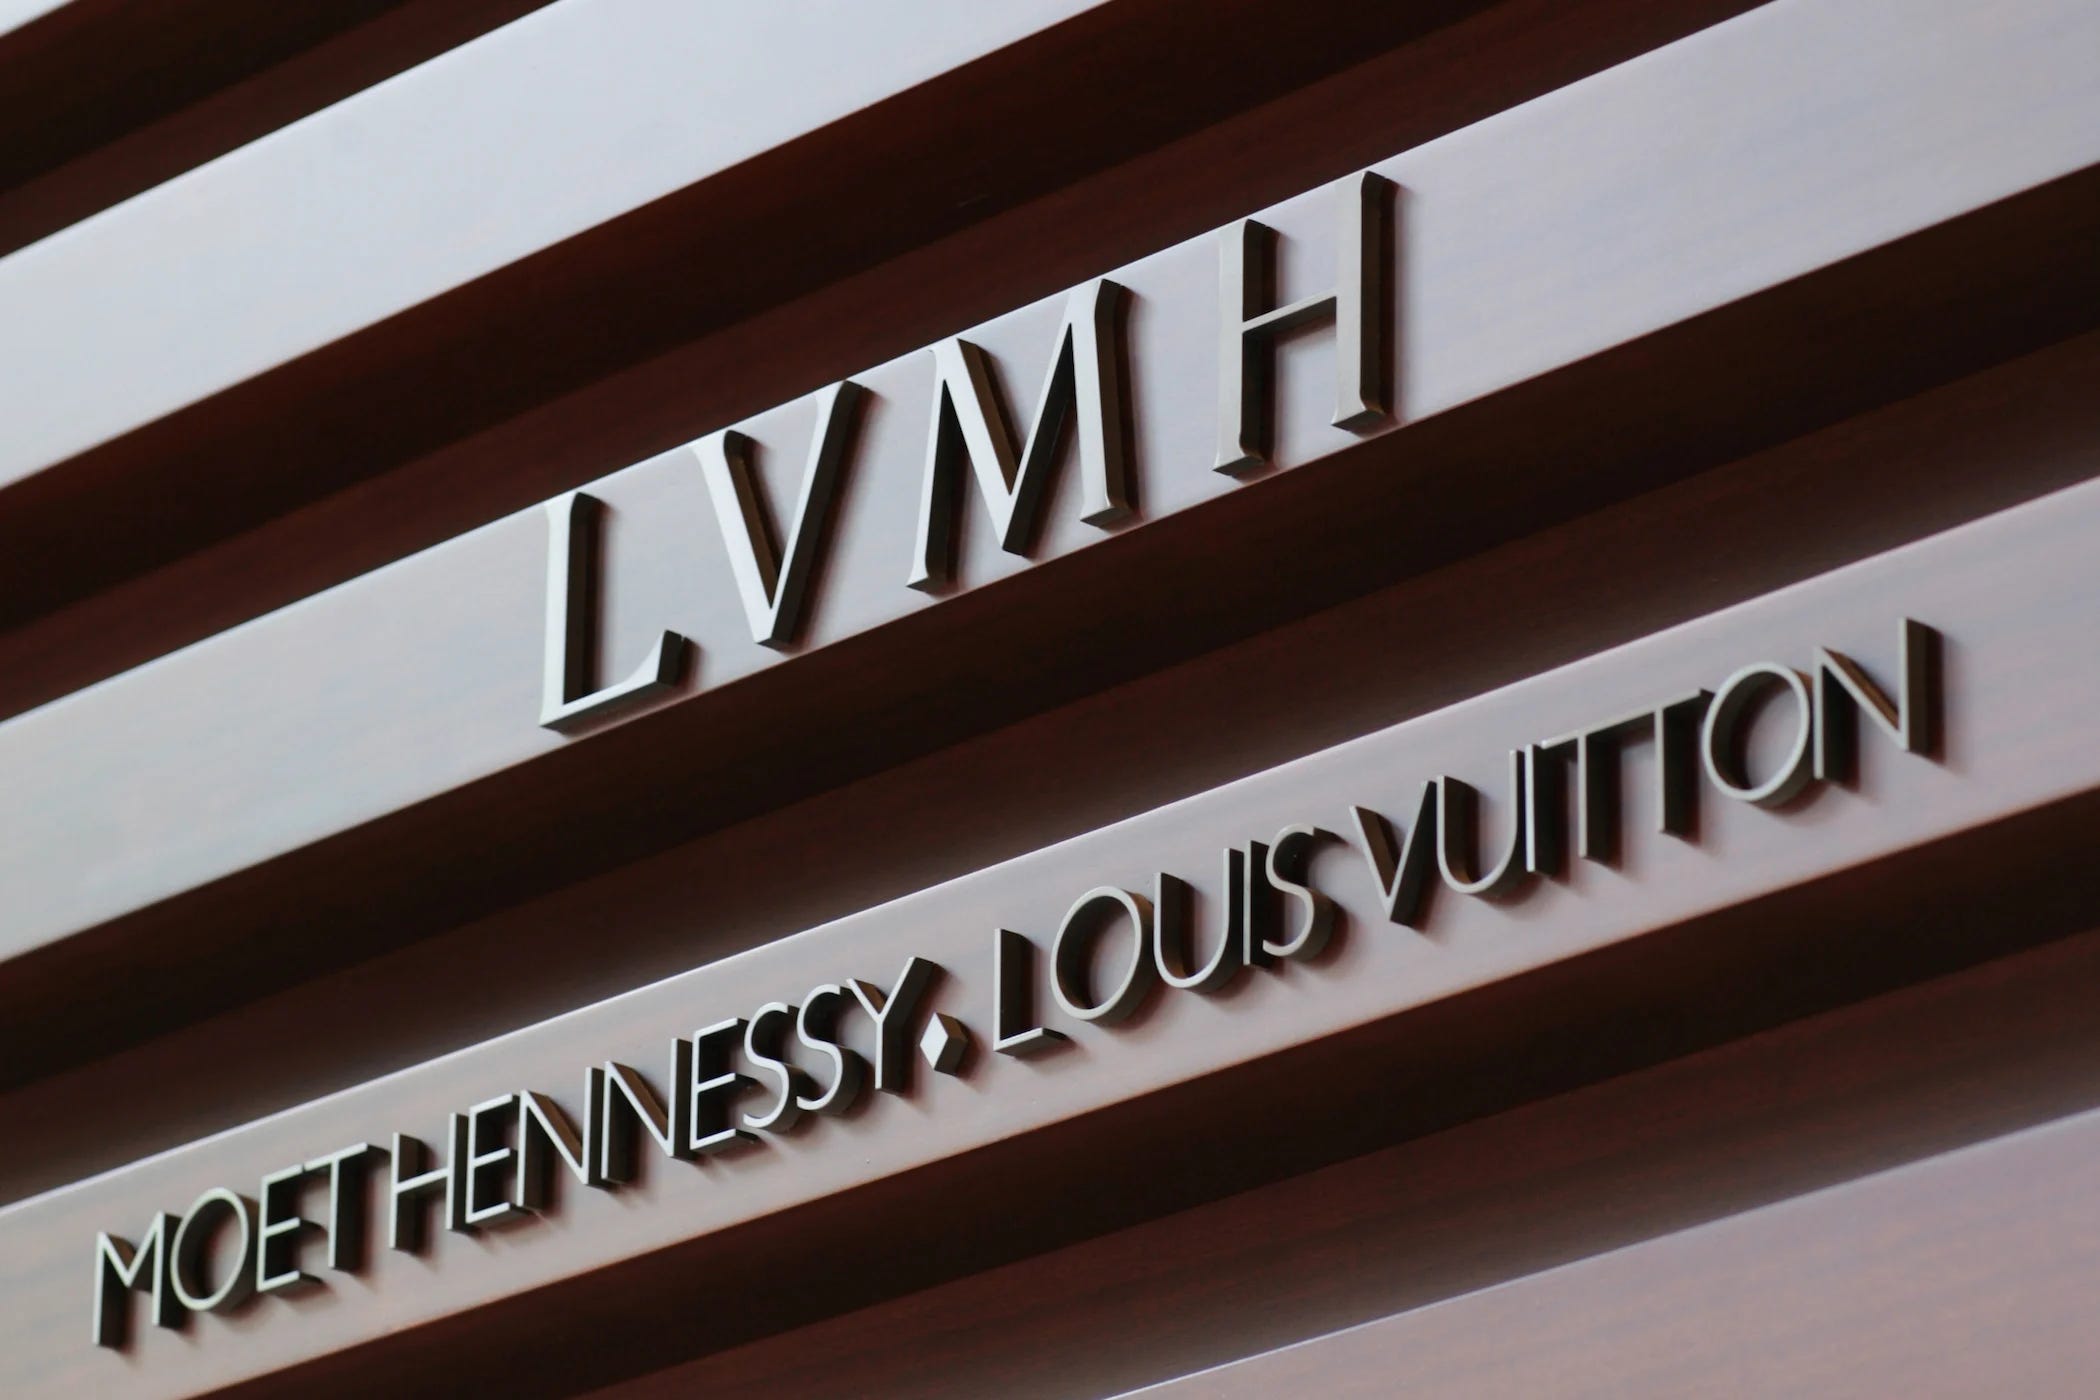 Louis Vuitton designed a luxury Jenga set priced at $2,400